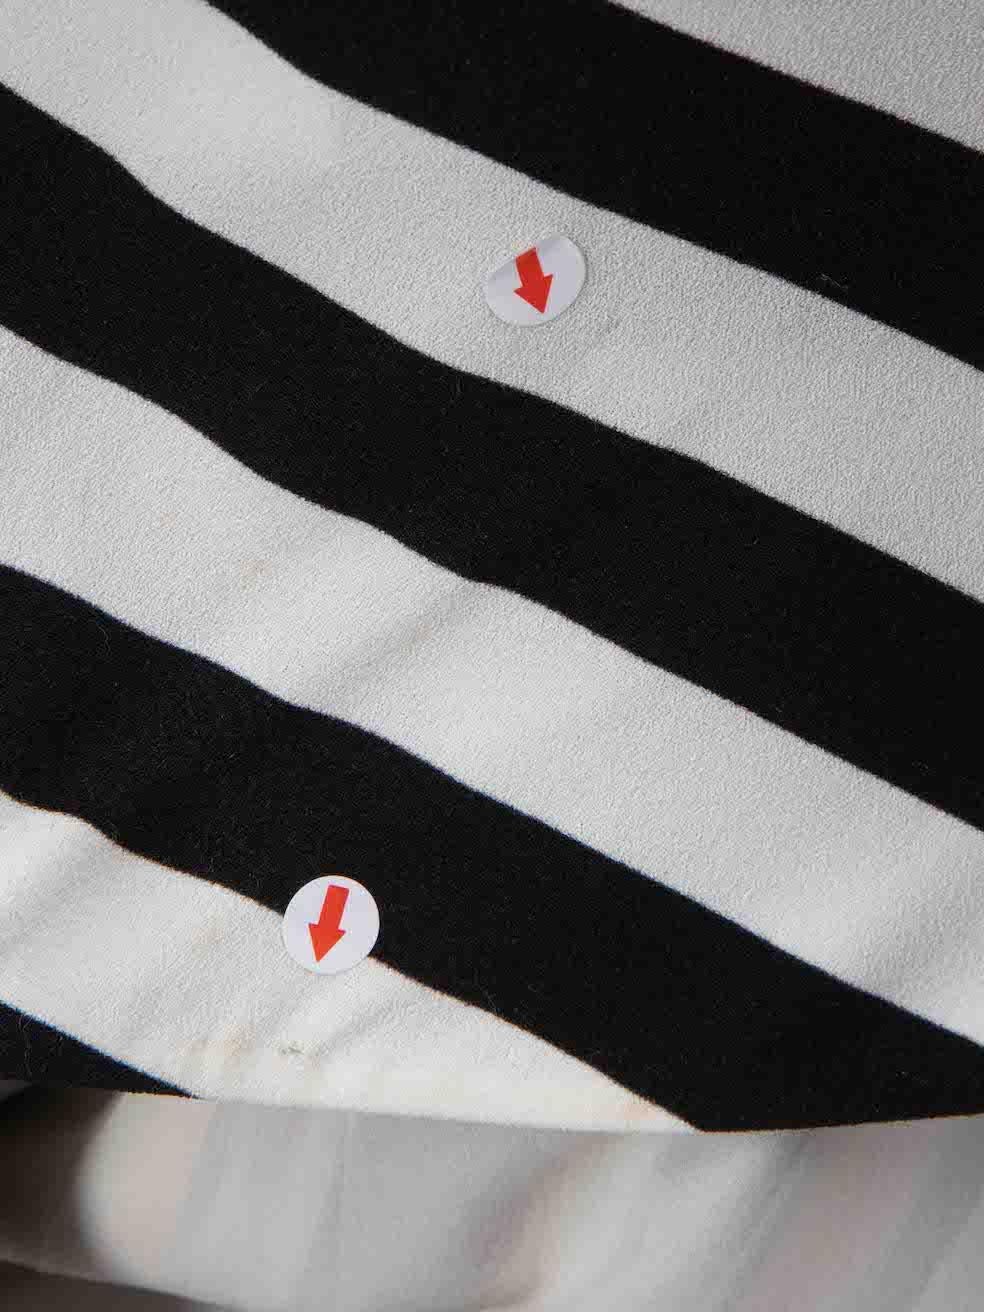 Dolce & Gabbana Black & White Striped Dress Size L For Sale 1